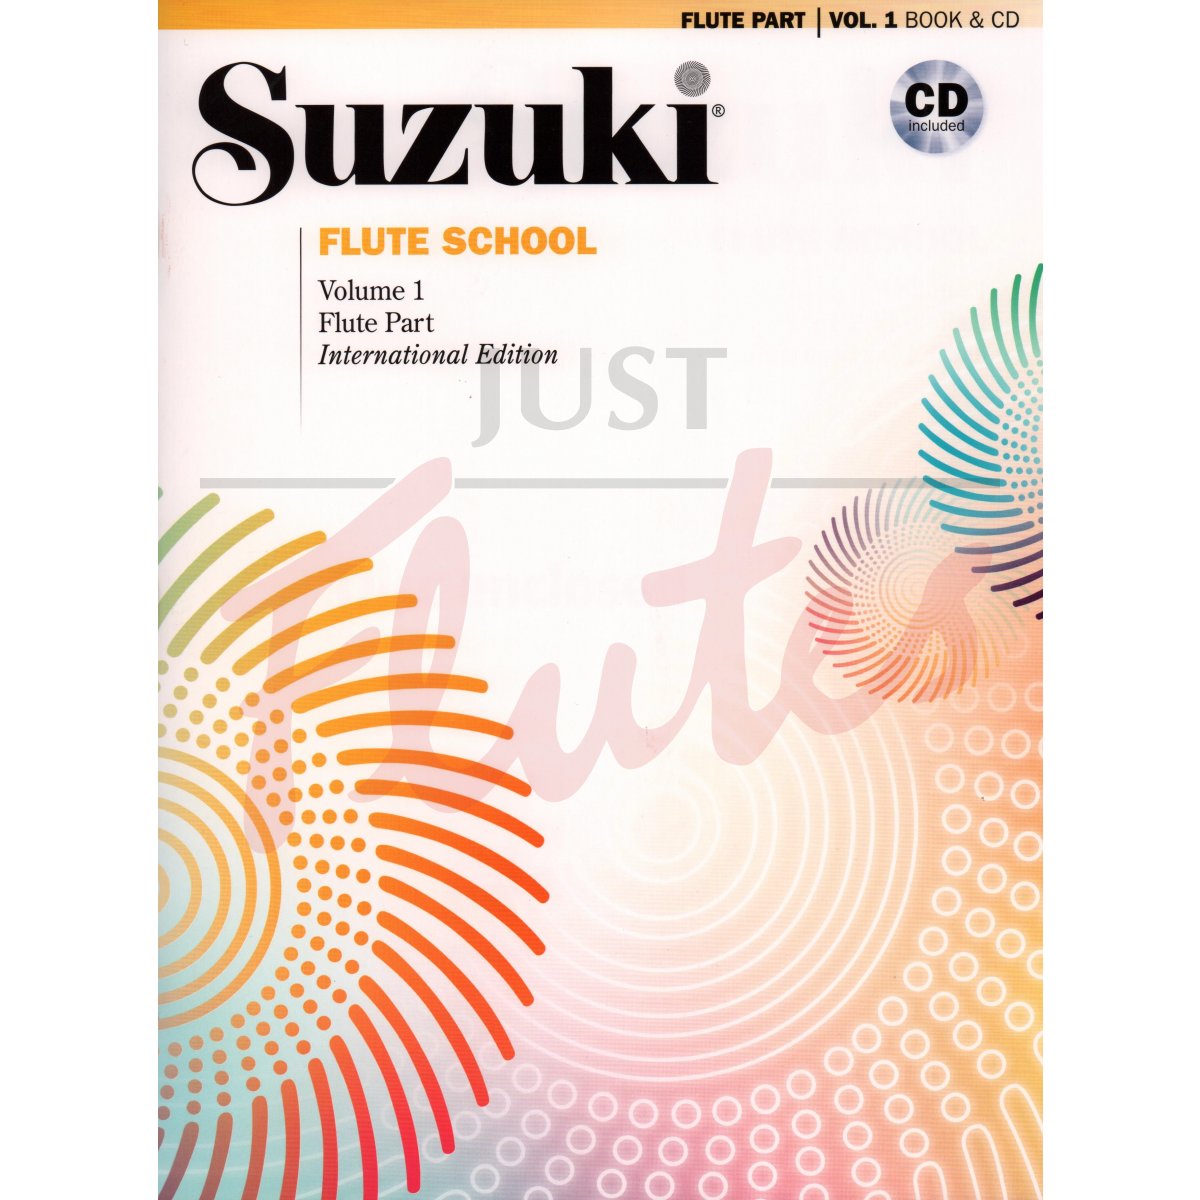 Suzuki Flute School Vol 1 (International Edition) [Flute Part]